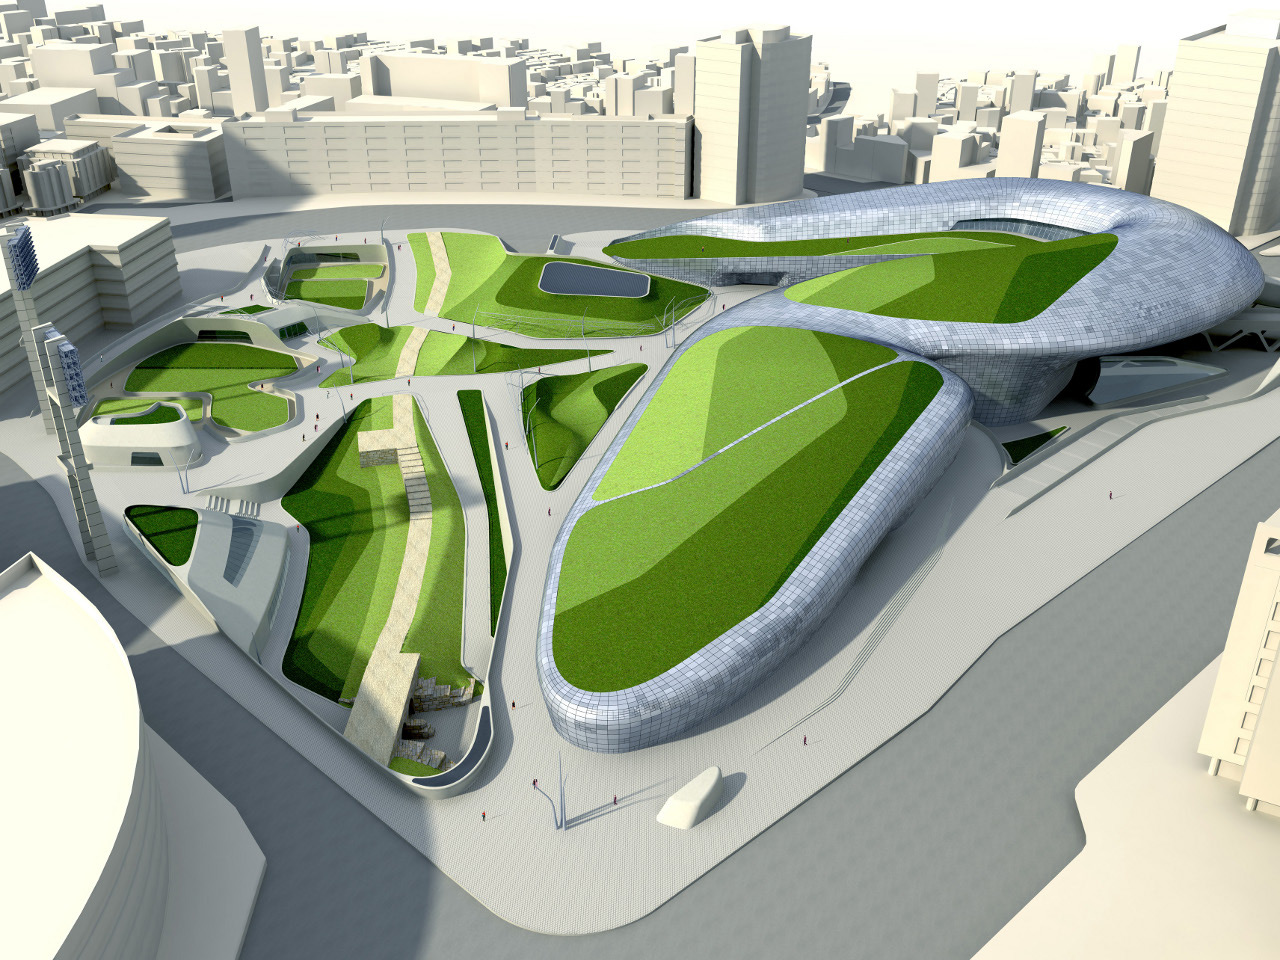 Zaha Hadid's Dongdaemun Design Park and Plaza green roof rendering